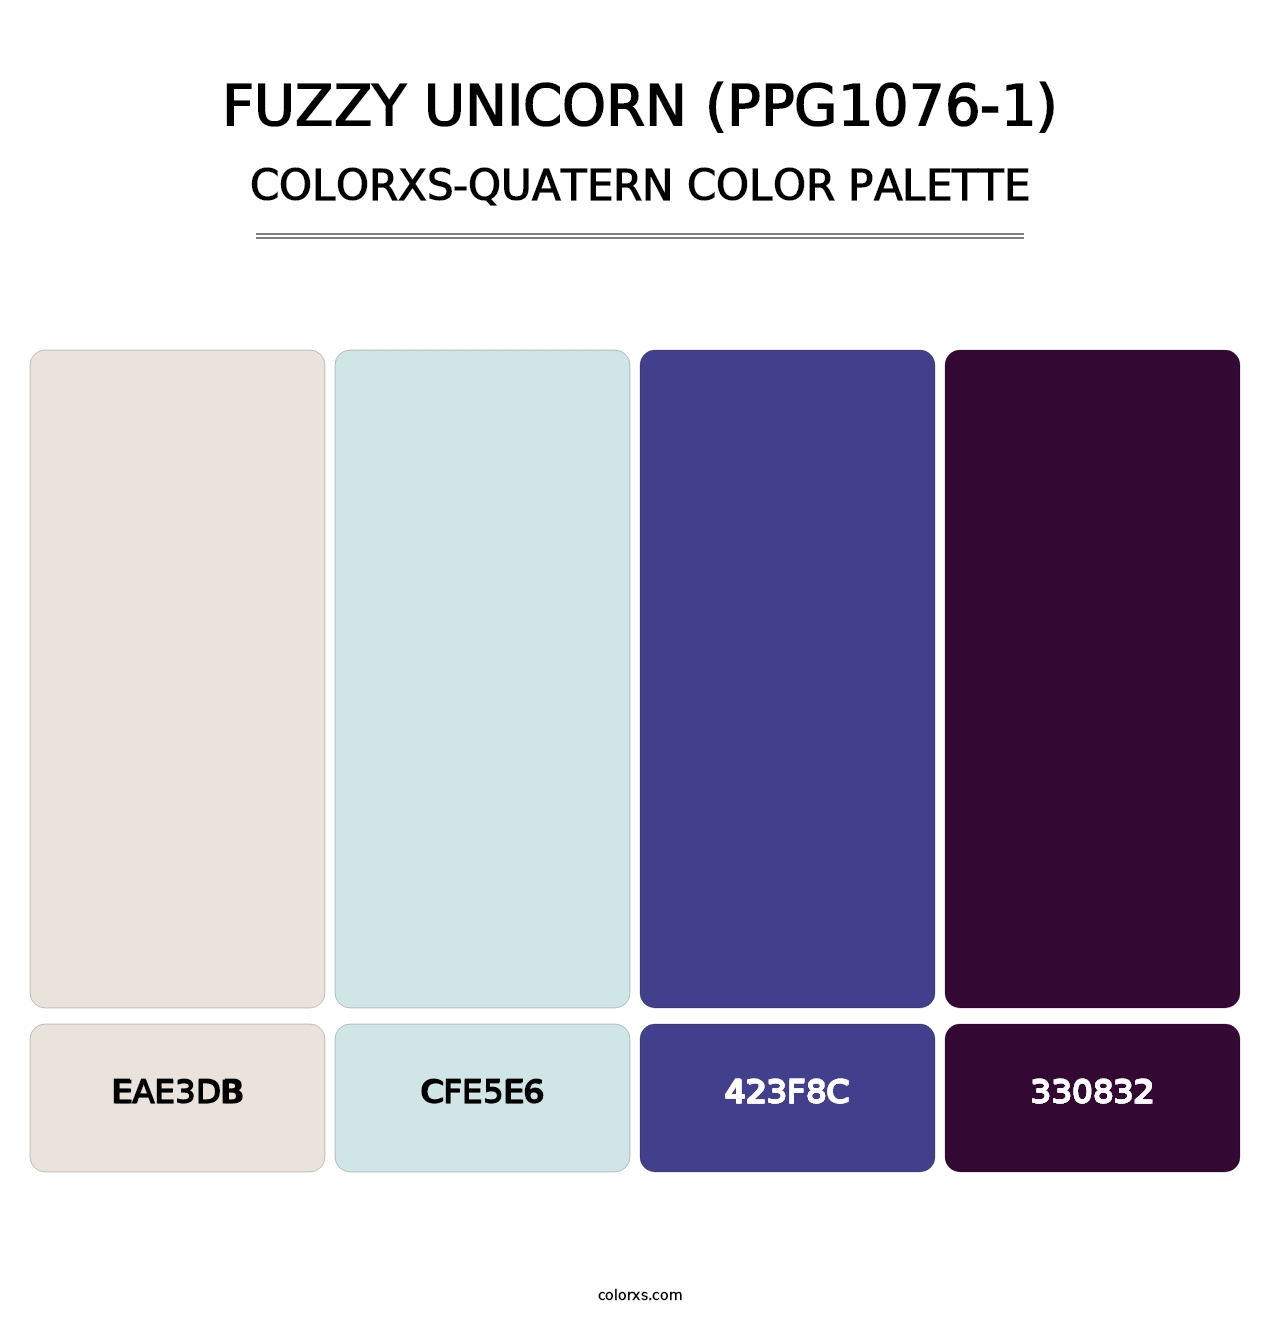 Fuzzy Unicorn (PPG1076-1) - Colorxs Quatern Palette